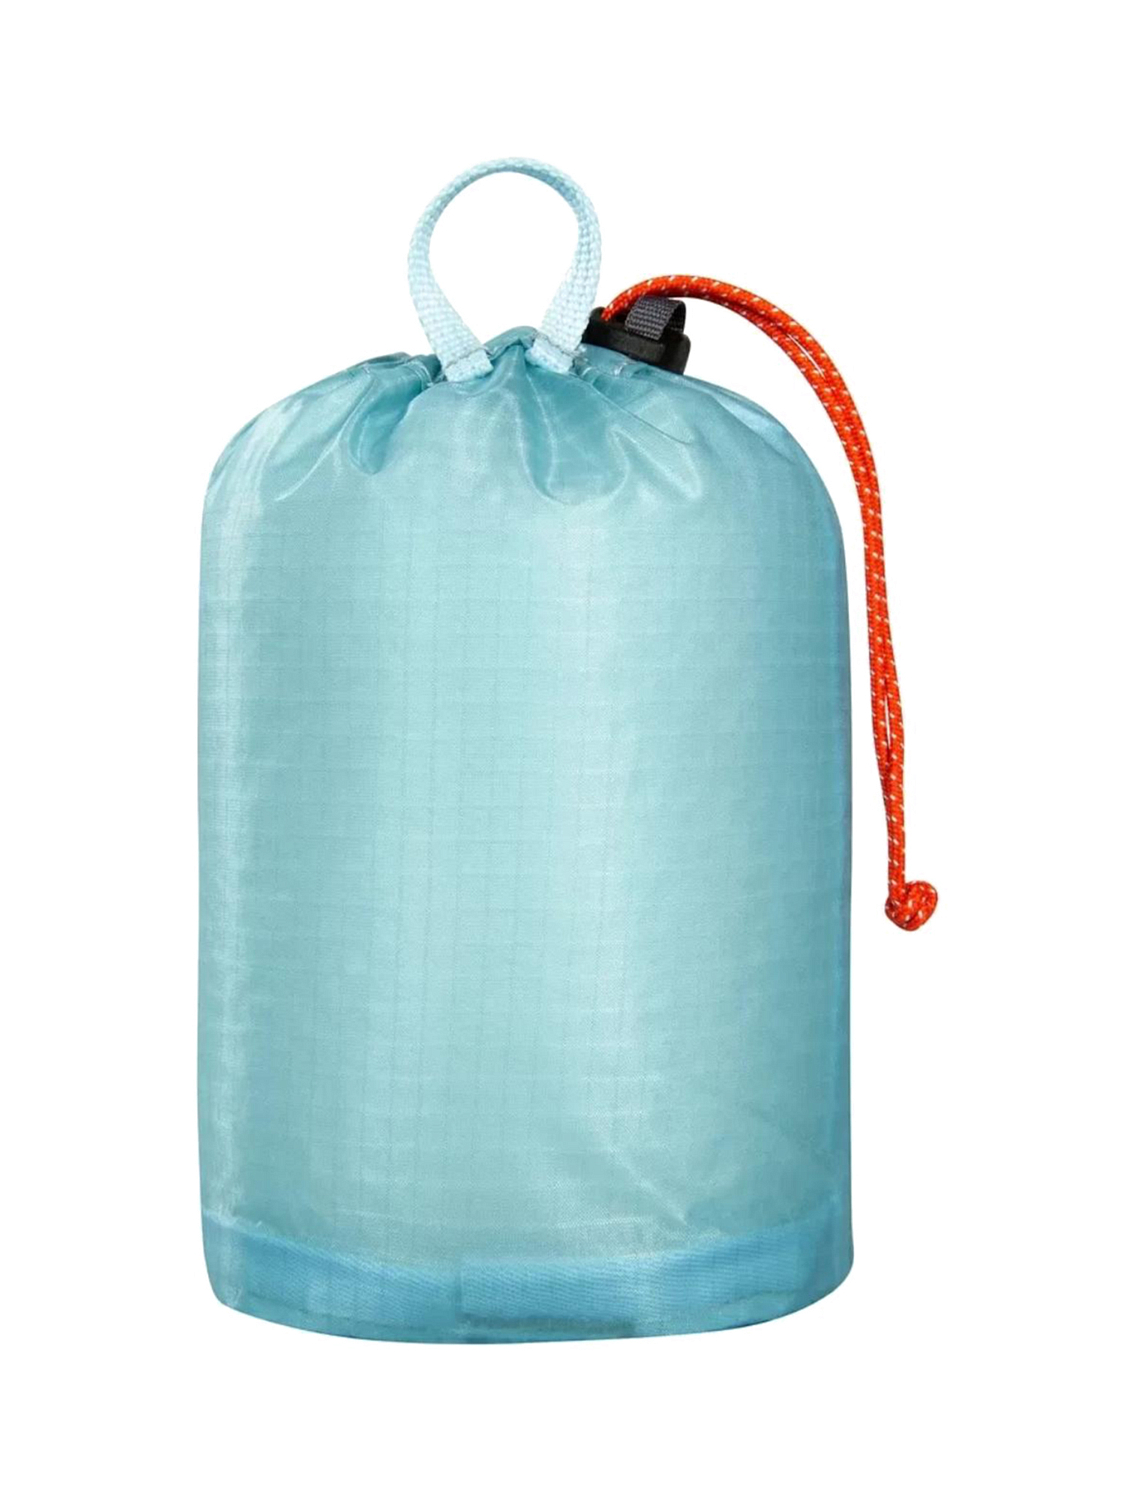 Мешок упаковочный Tatonka SQZY Stuff Bag 0,5L Light Blue